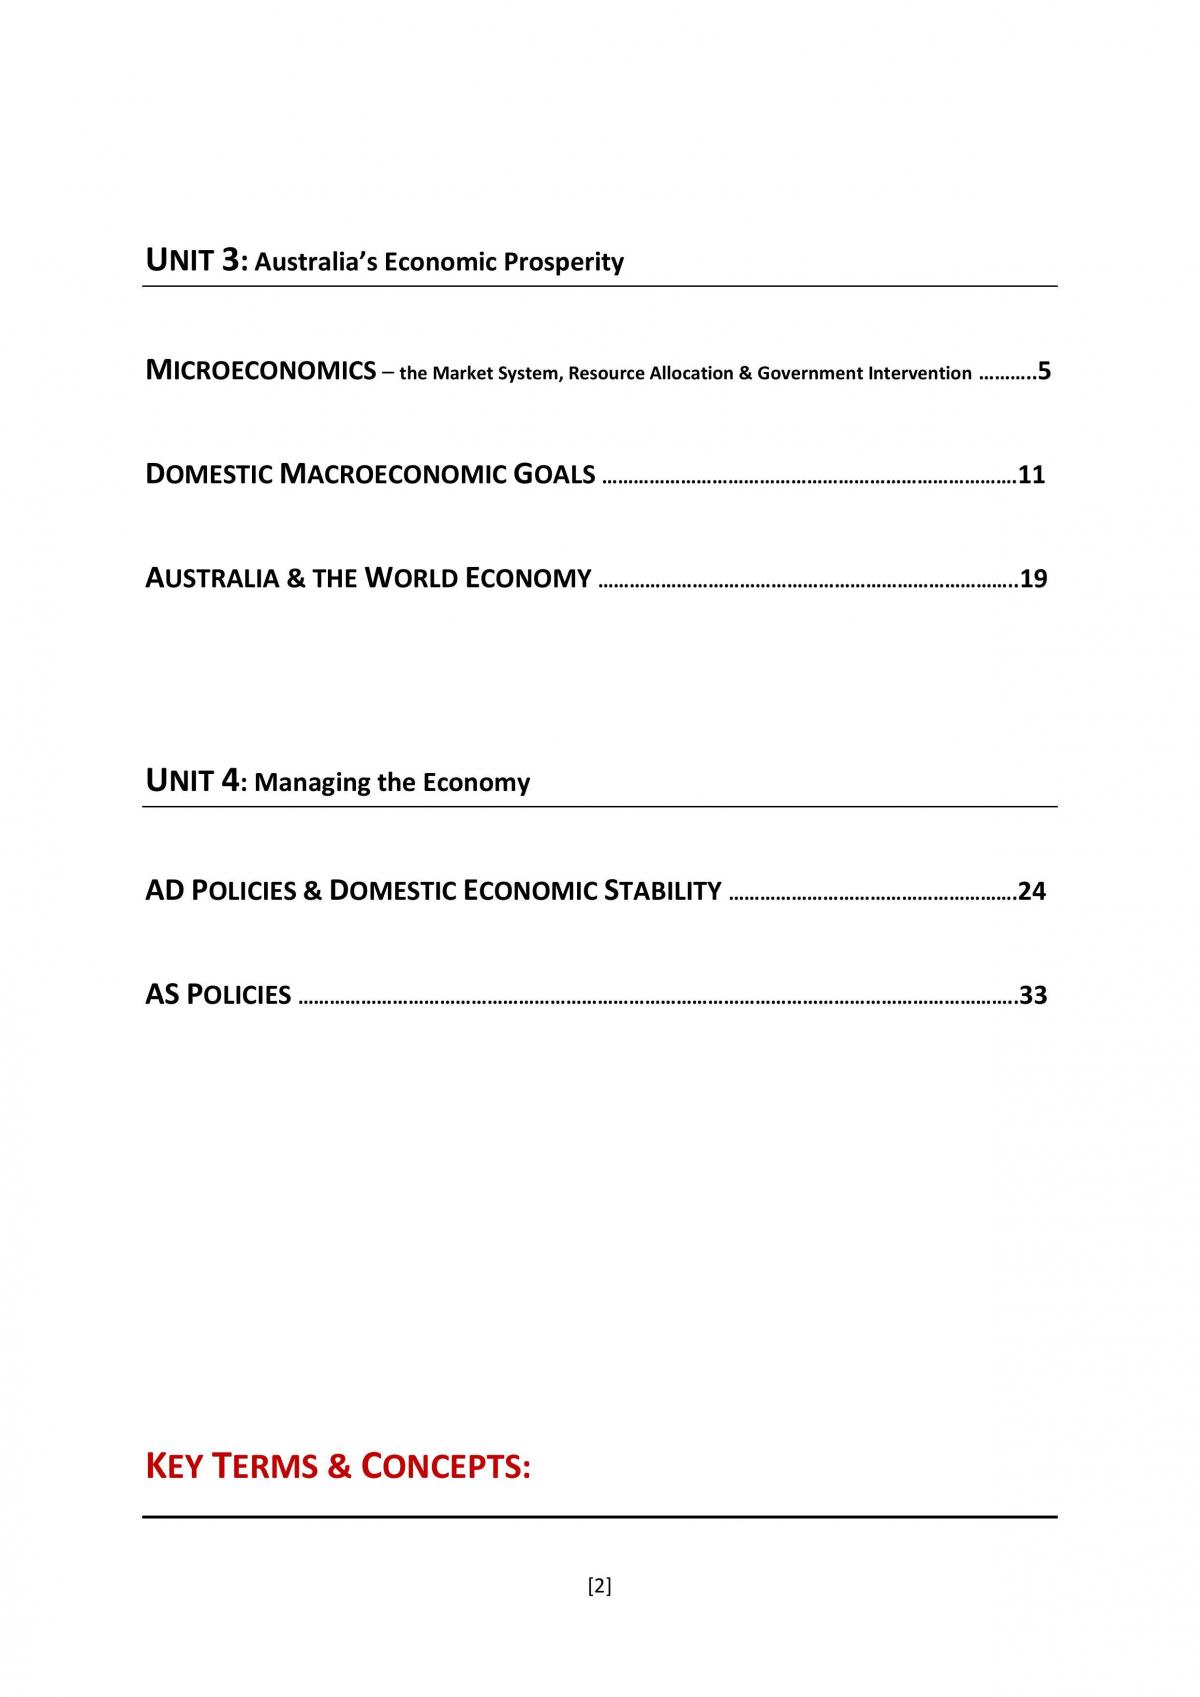 Complete Economics 2020 Study Notes - Page 2